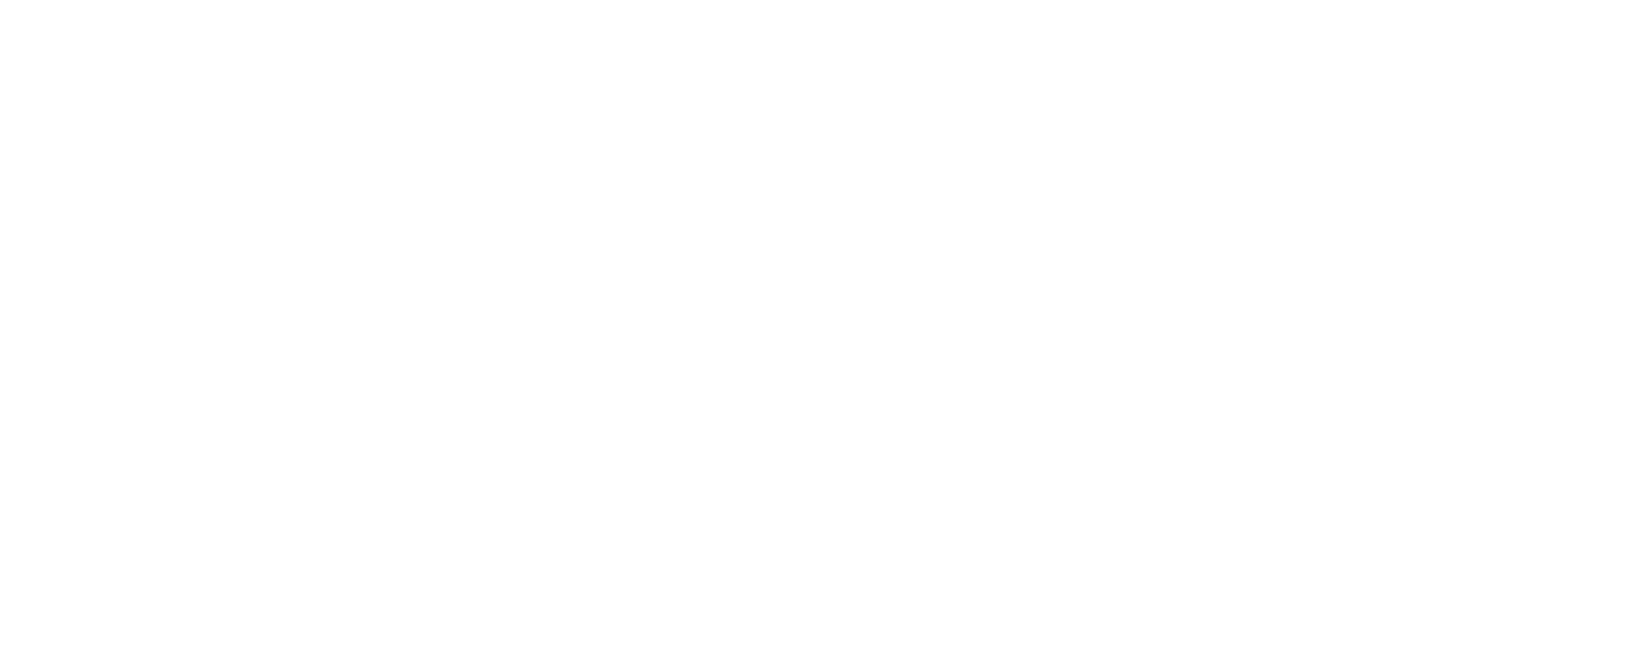 Future Financial Group LLC